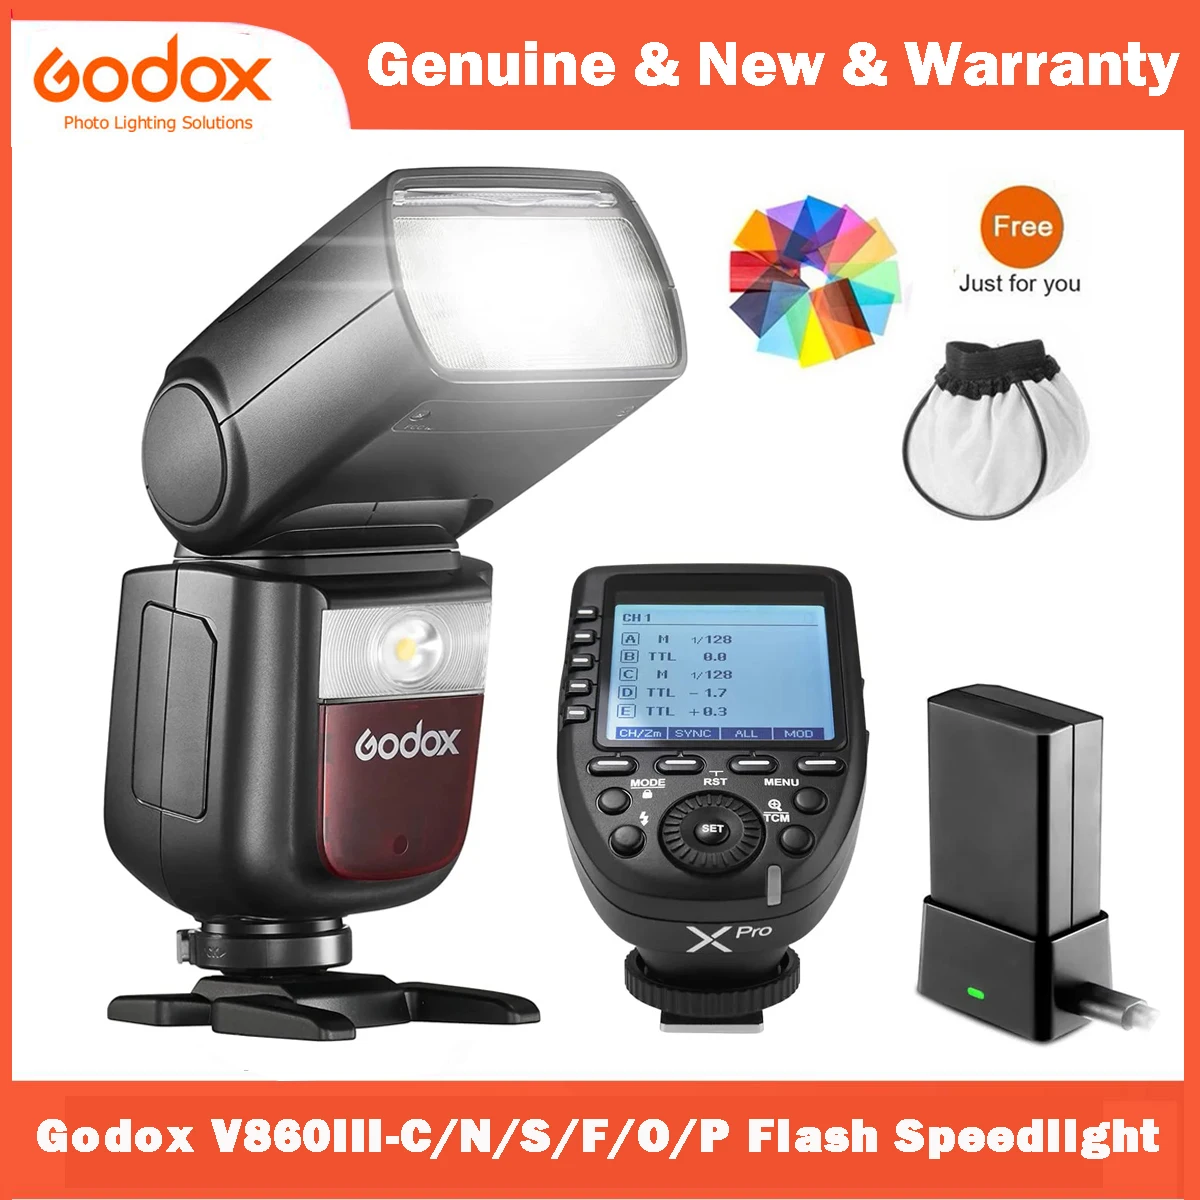 

Godox V860III Canon Nikon Sony Camera Flash Speedlite Speedlight Light 2.4G HSS 1/8000s 480 Full-Power Flashes with Xpro Trigger